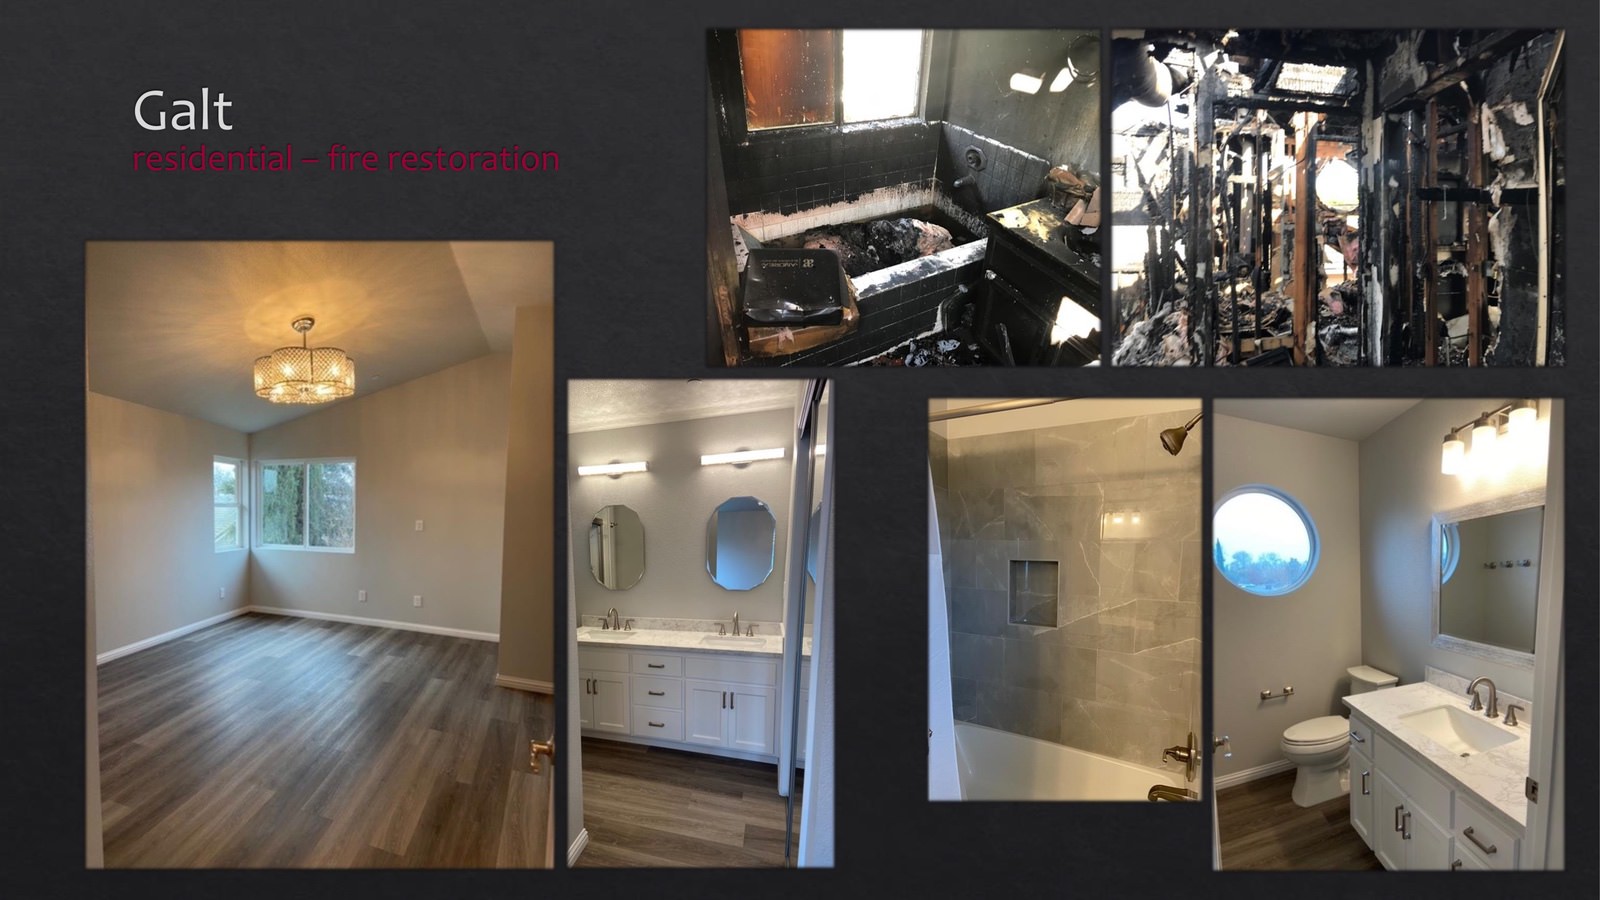 Galt Residential fire restoration - bathroom + living room - lightbox